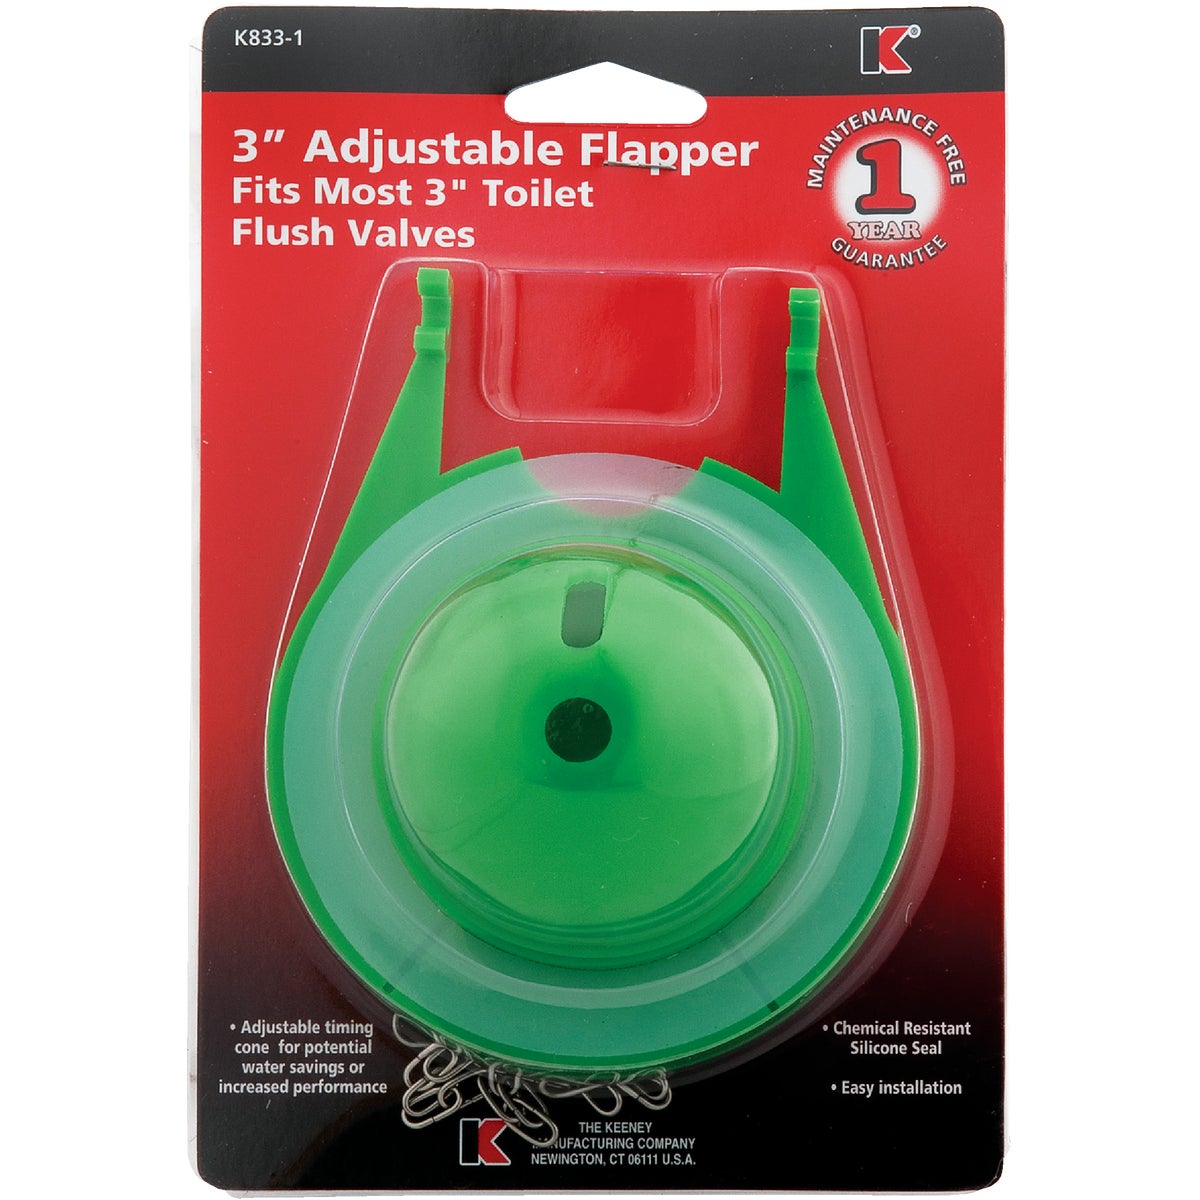 Item 400005, Fits most 3" toilet flush valves, including Keeney FlushAll.